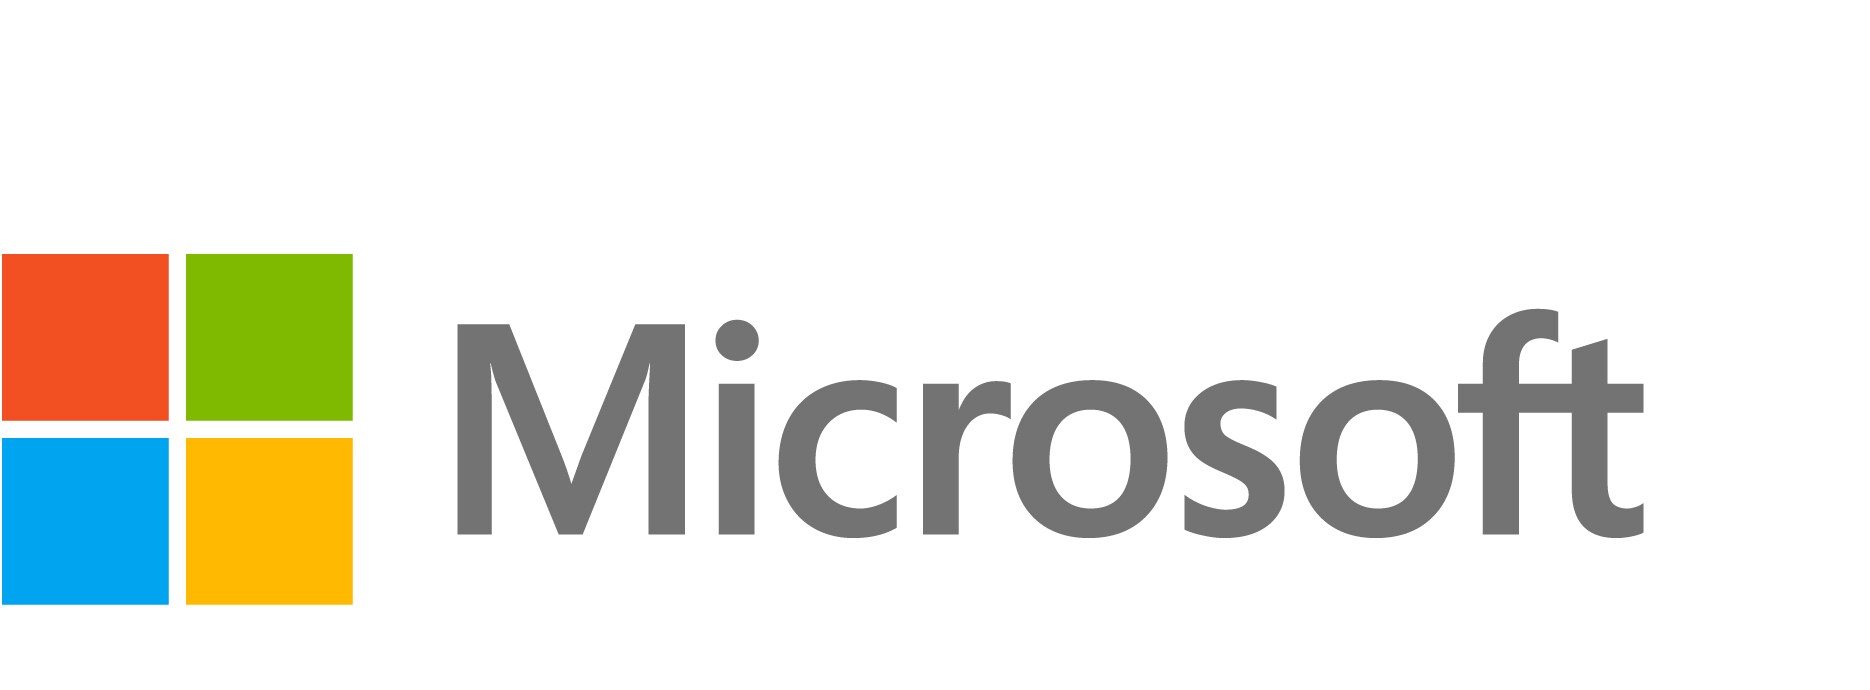 Microsoft Dynamics 365 for Operations, Enterprise edition - Sandbox Tier 2: